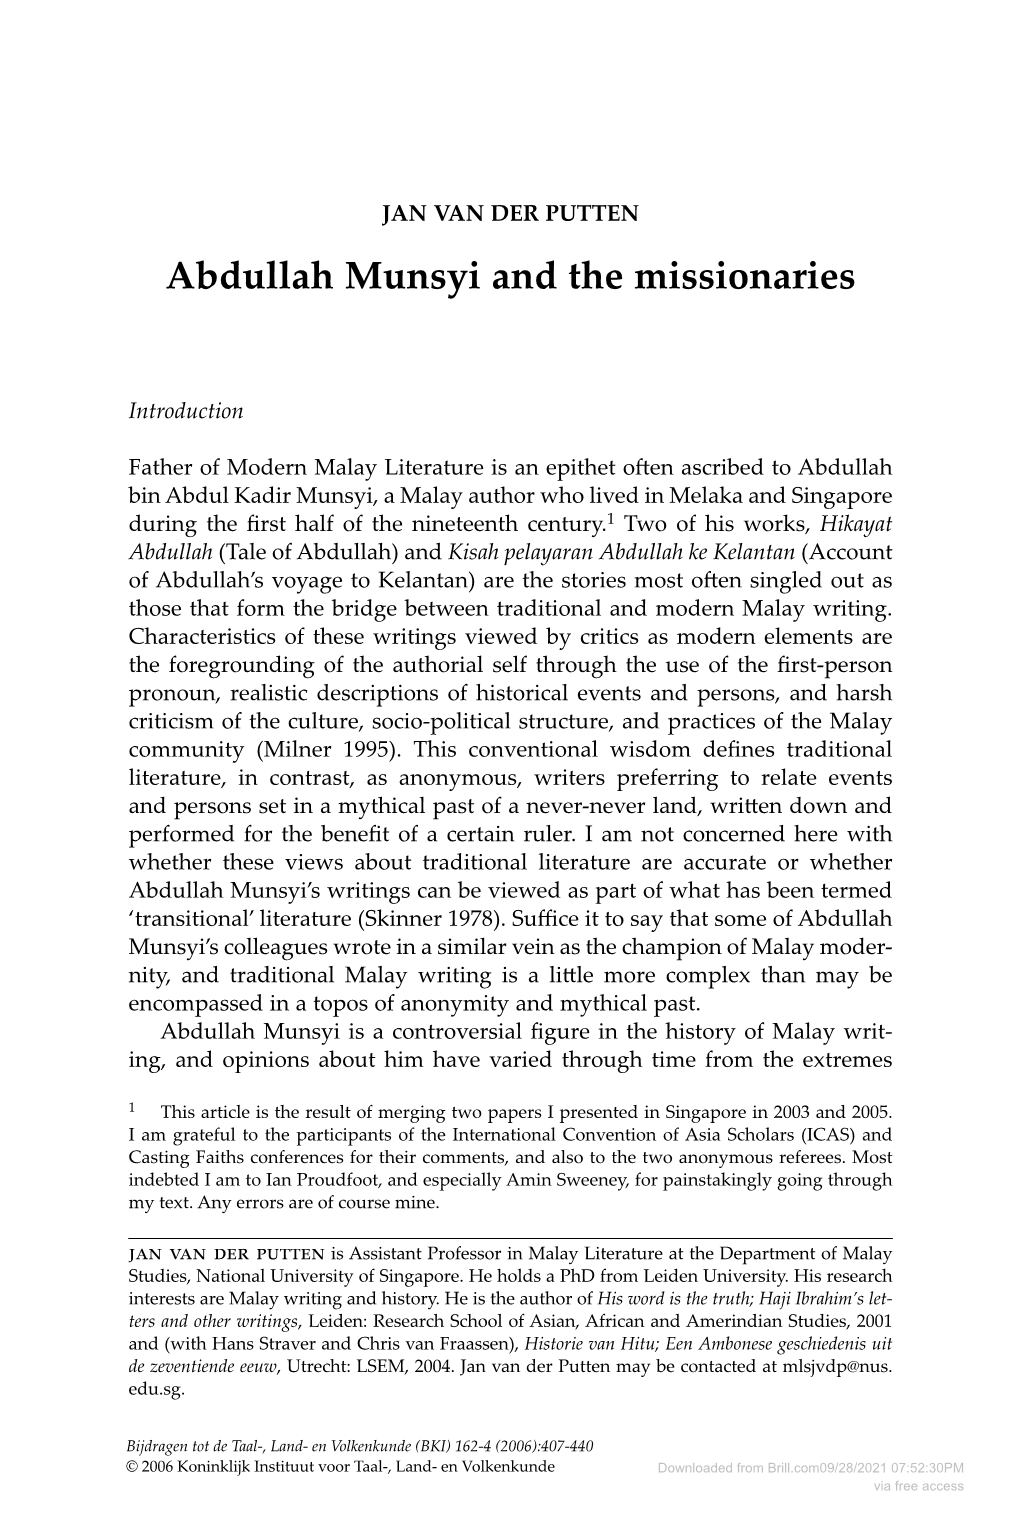 Abdullah Munsyi and the Missionaries